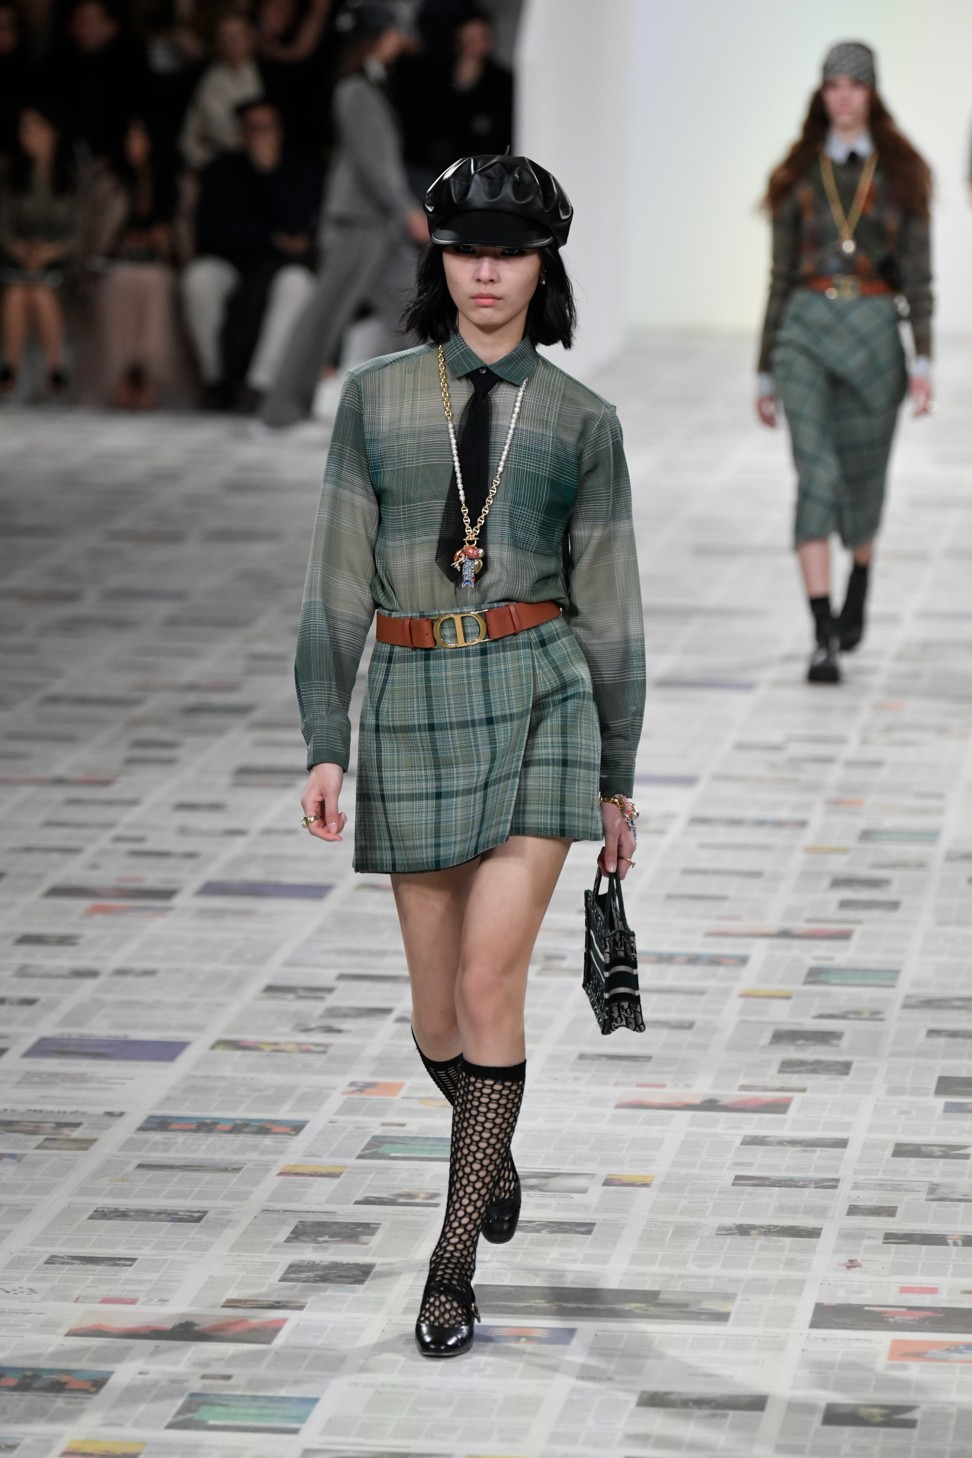 Christian Dior presented its autumn/winter 2020 collection at Paris Fashion Week. Photo: Xinhua